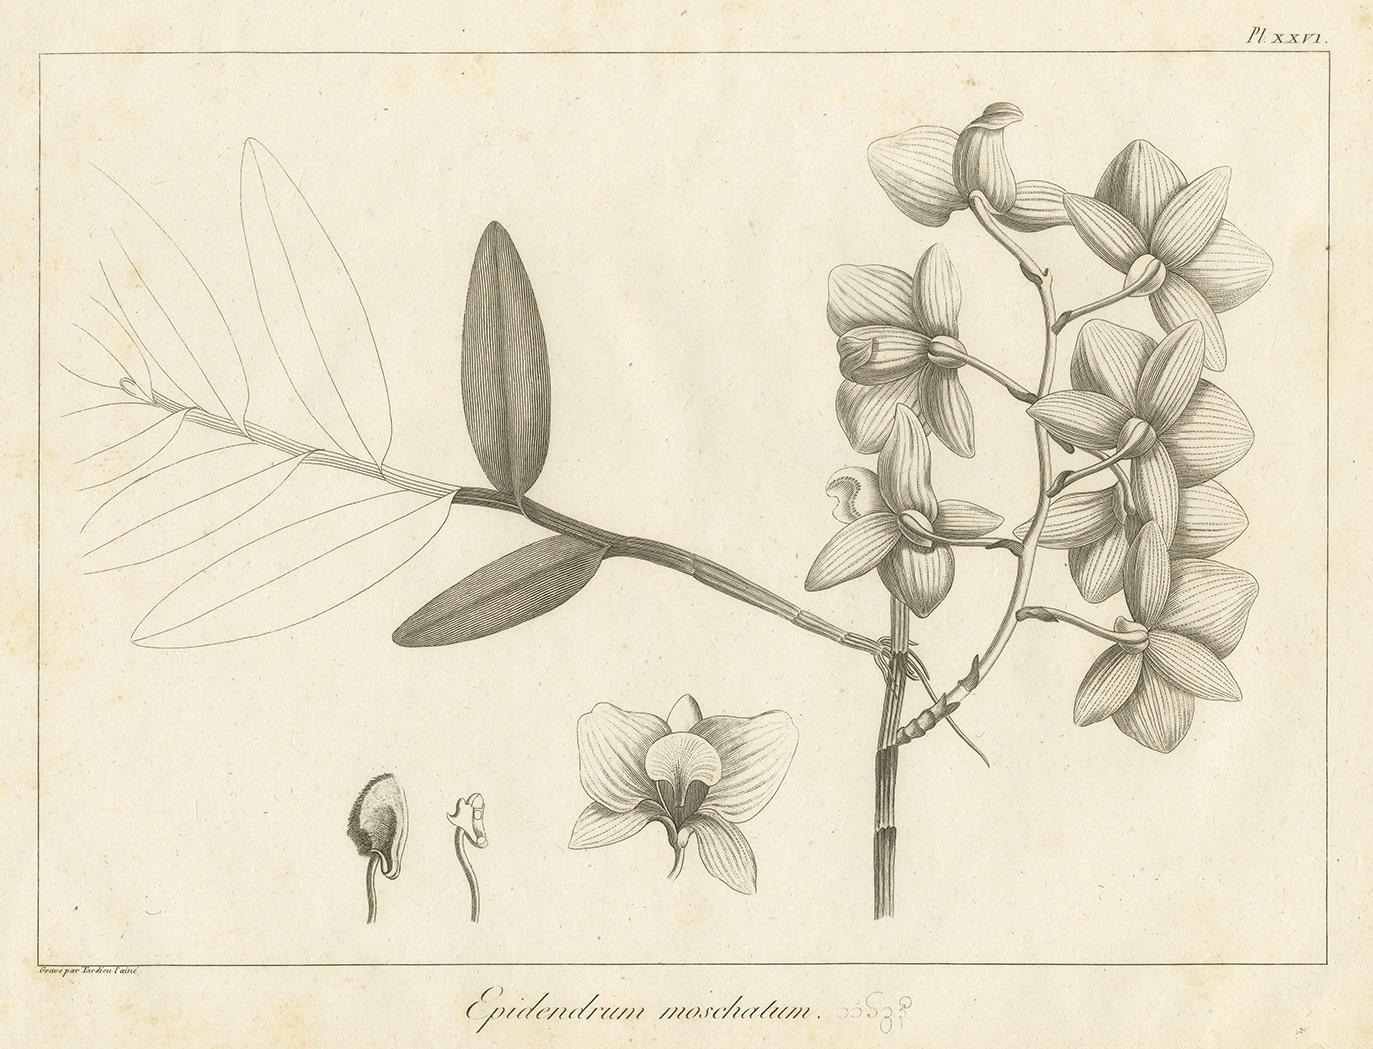 Antique print titled 'Epidendrum Moschatum'. Print of the musky-smelling dendrobium, a species of orchid. This print originates from 'Relation de l'Ambassade Anglaise, envoyée en 1795 dans le Royaume d'Ava, ou l'Empire des Birmans' by M. Symes.